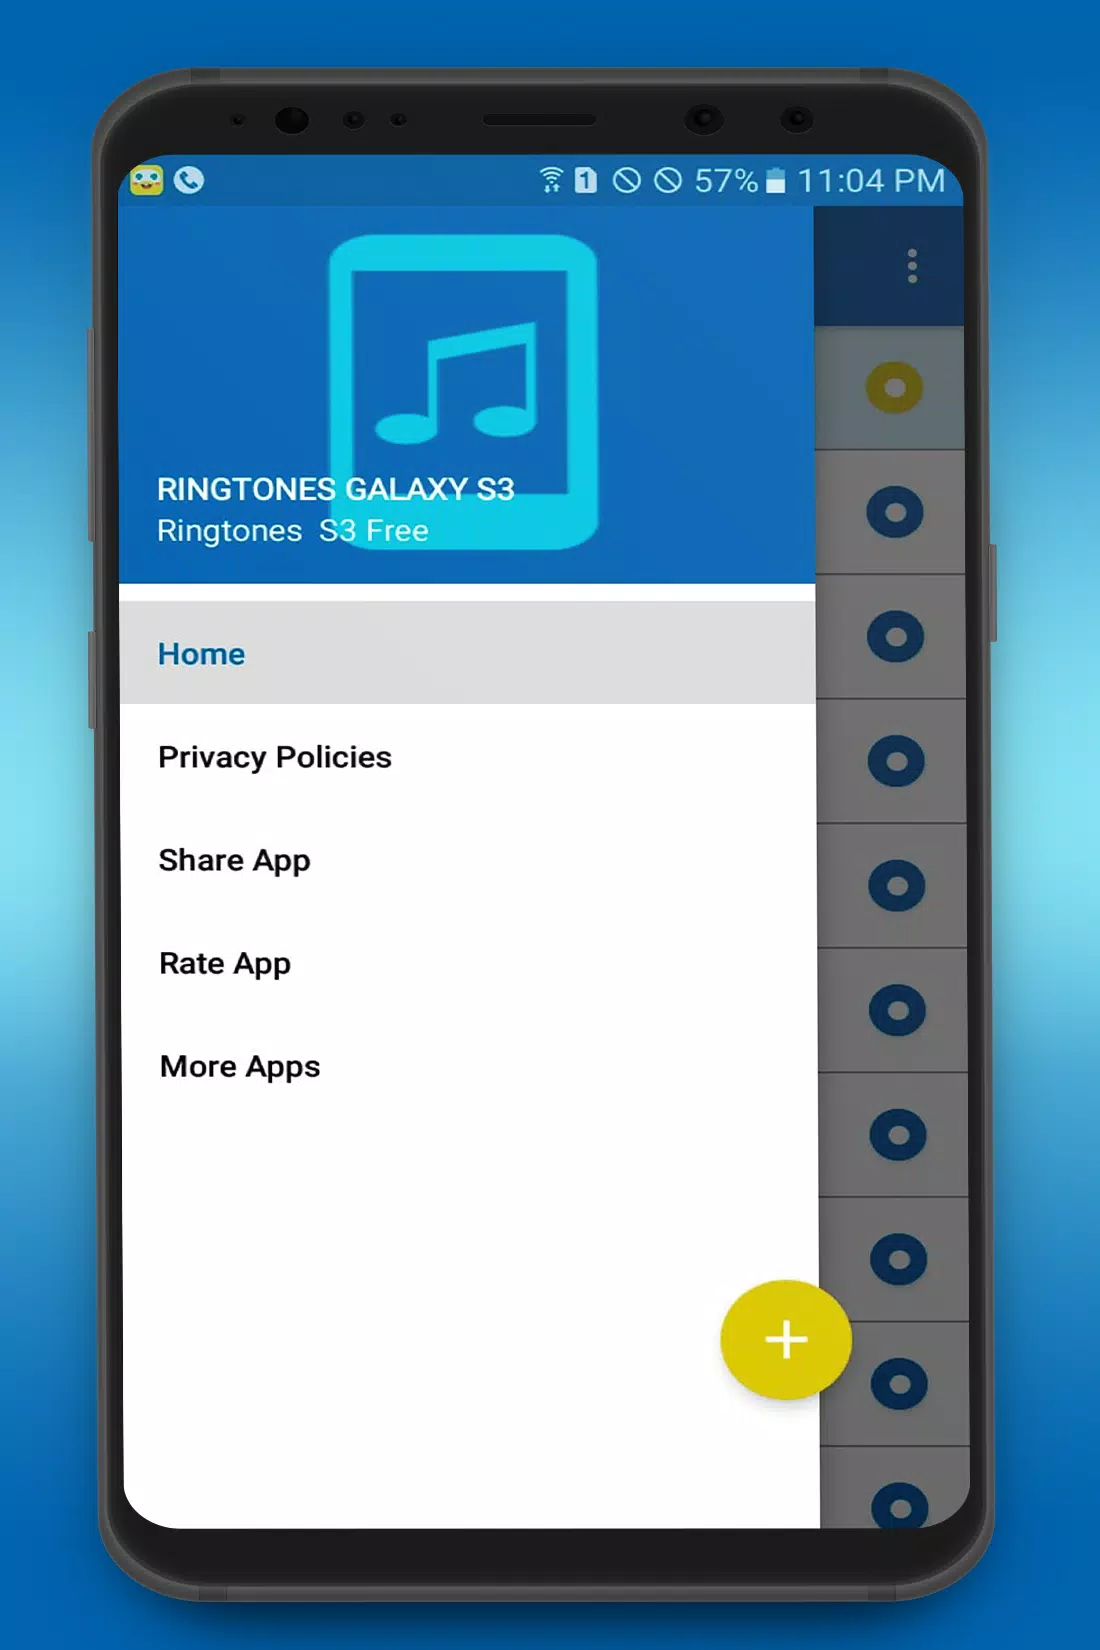 Roblox para Samsung Galaxy J1 mini - Baixar arquivo apk gratuitamente para  Galaxy J1 mini